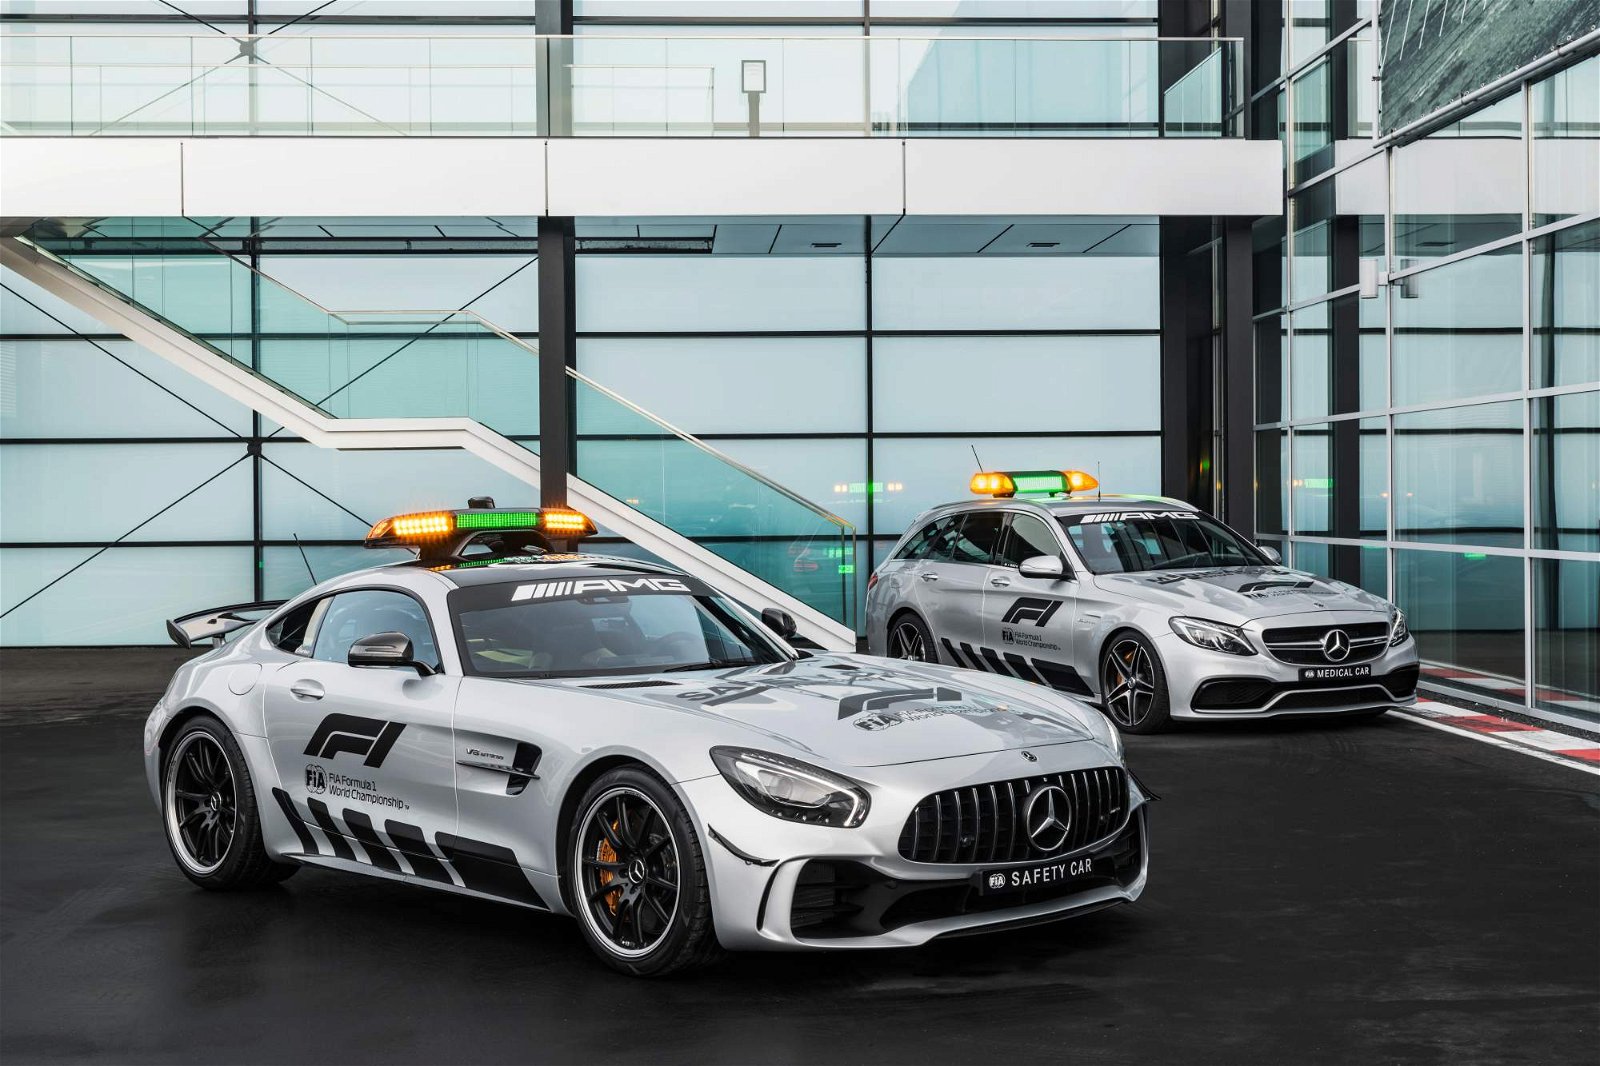 Mercedes-AMG-GT-R-Official-F1-Safety-Car-2018-13